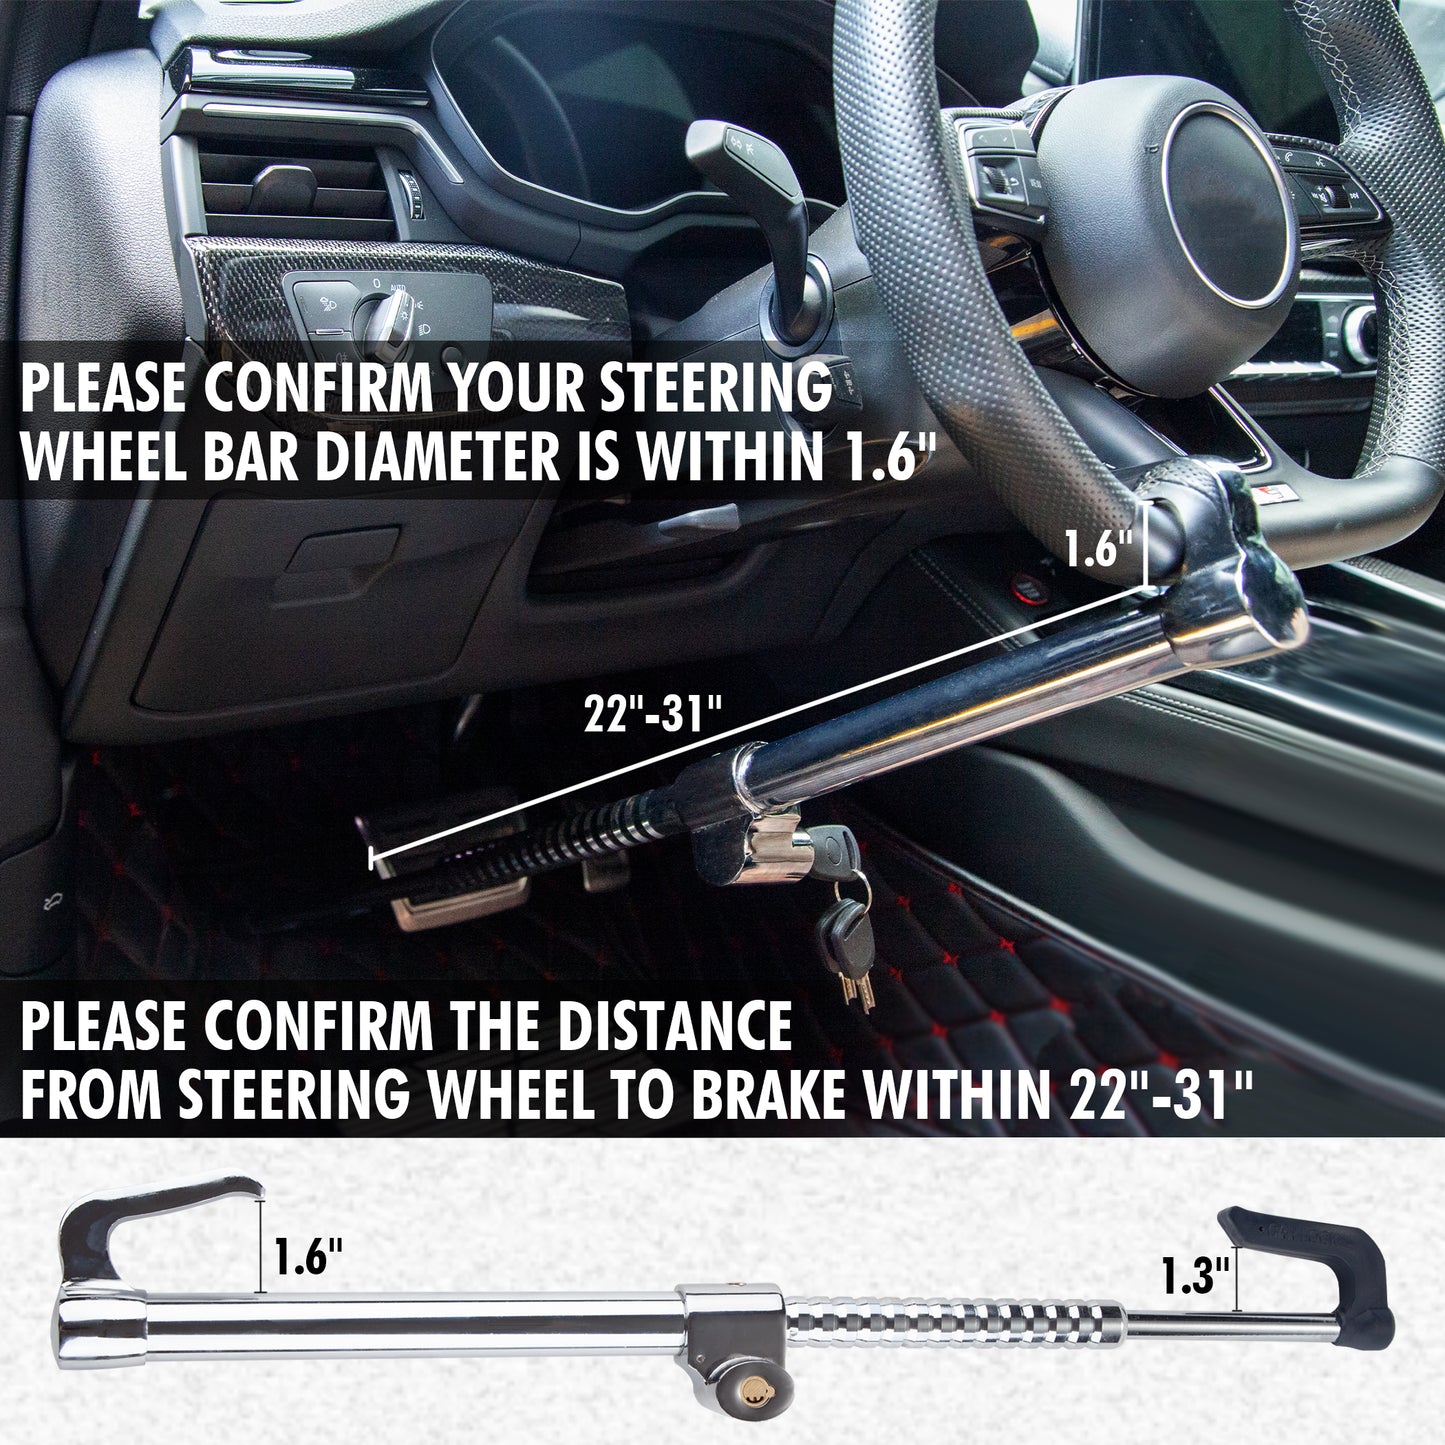 CARTMAN Steering Wheel Lock Bar Heavy Duty Anti Theft Security Brake Pedal Lock with Adjustable Length 3 Keys Included Silver